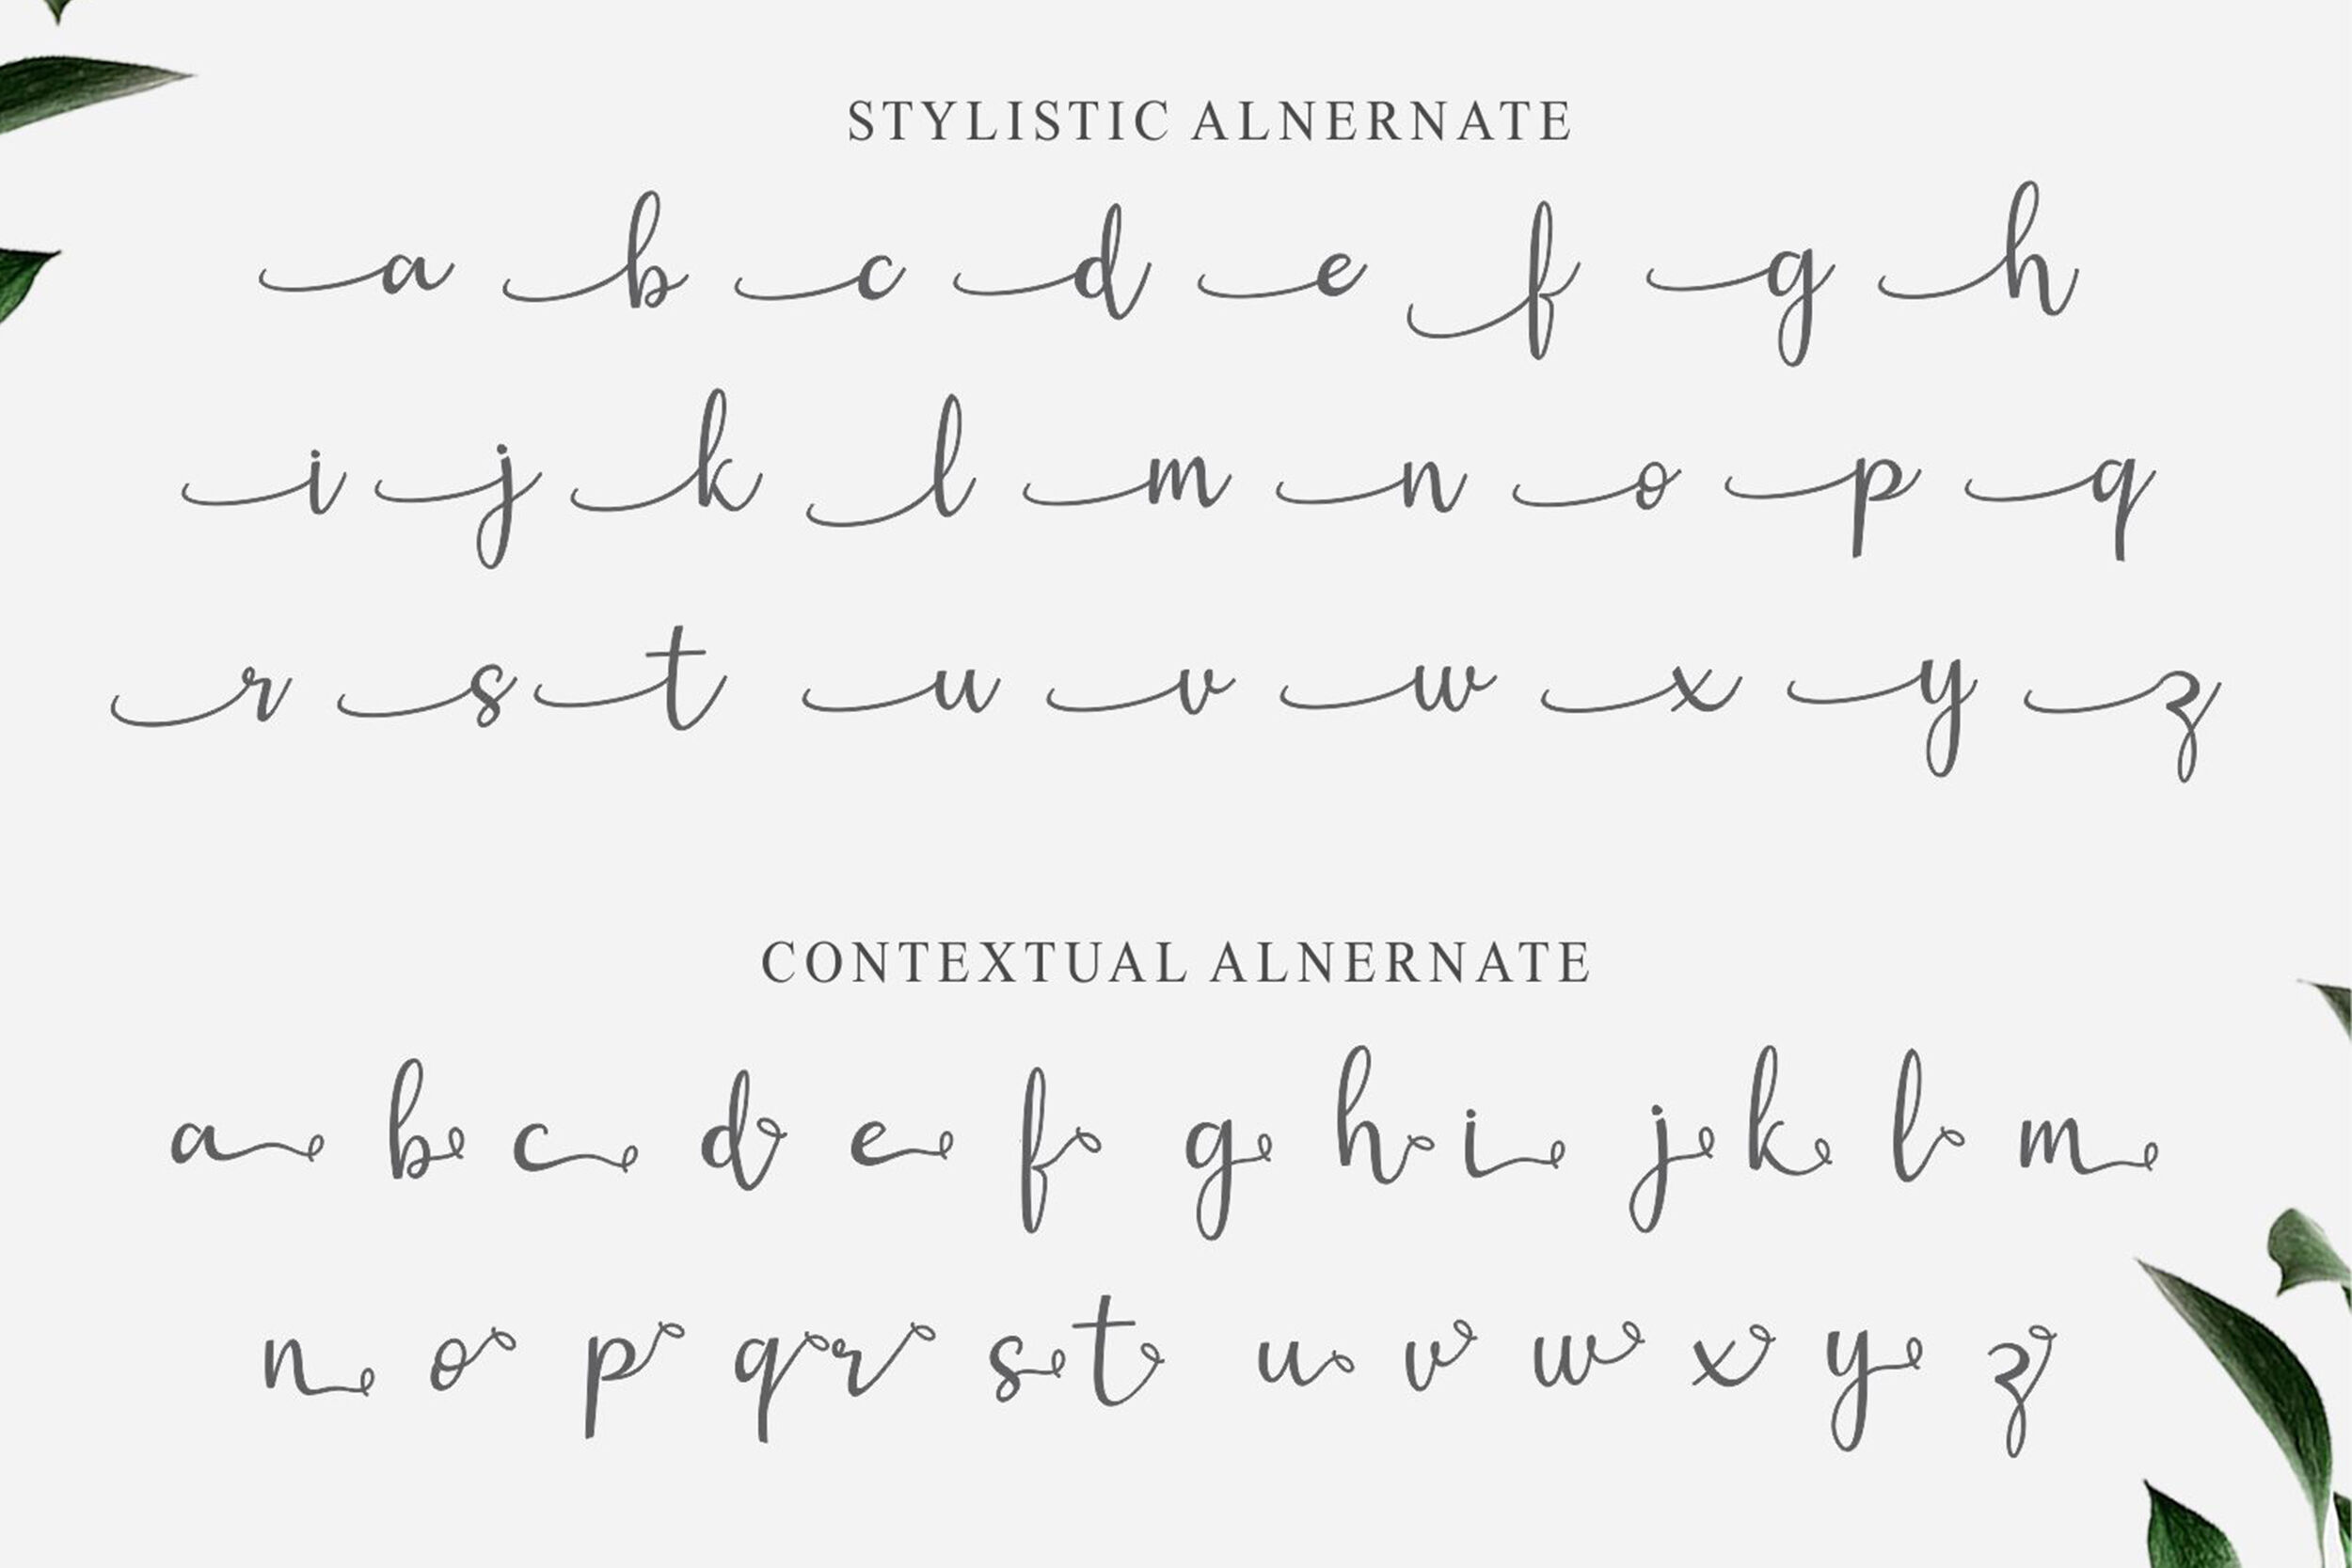 Gisella A Script Handwritten Font By Girinesia Thehungryjpeg Com